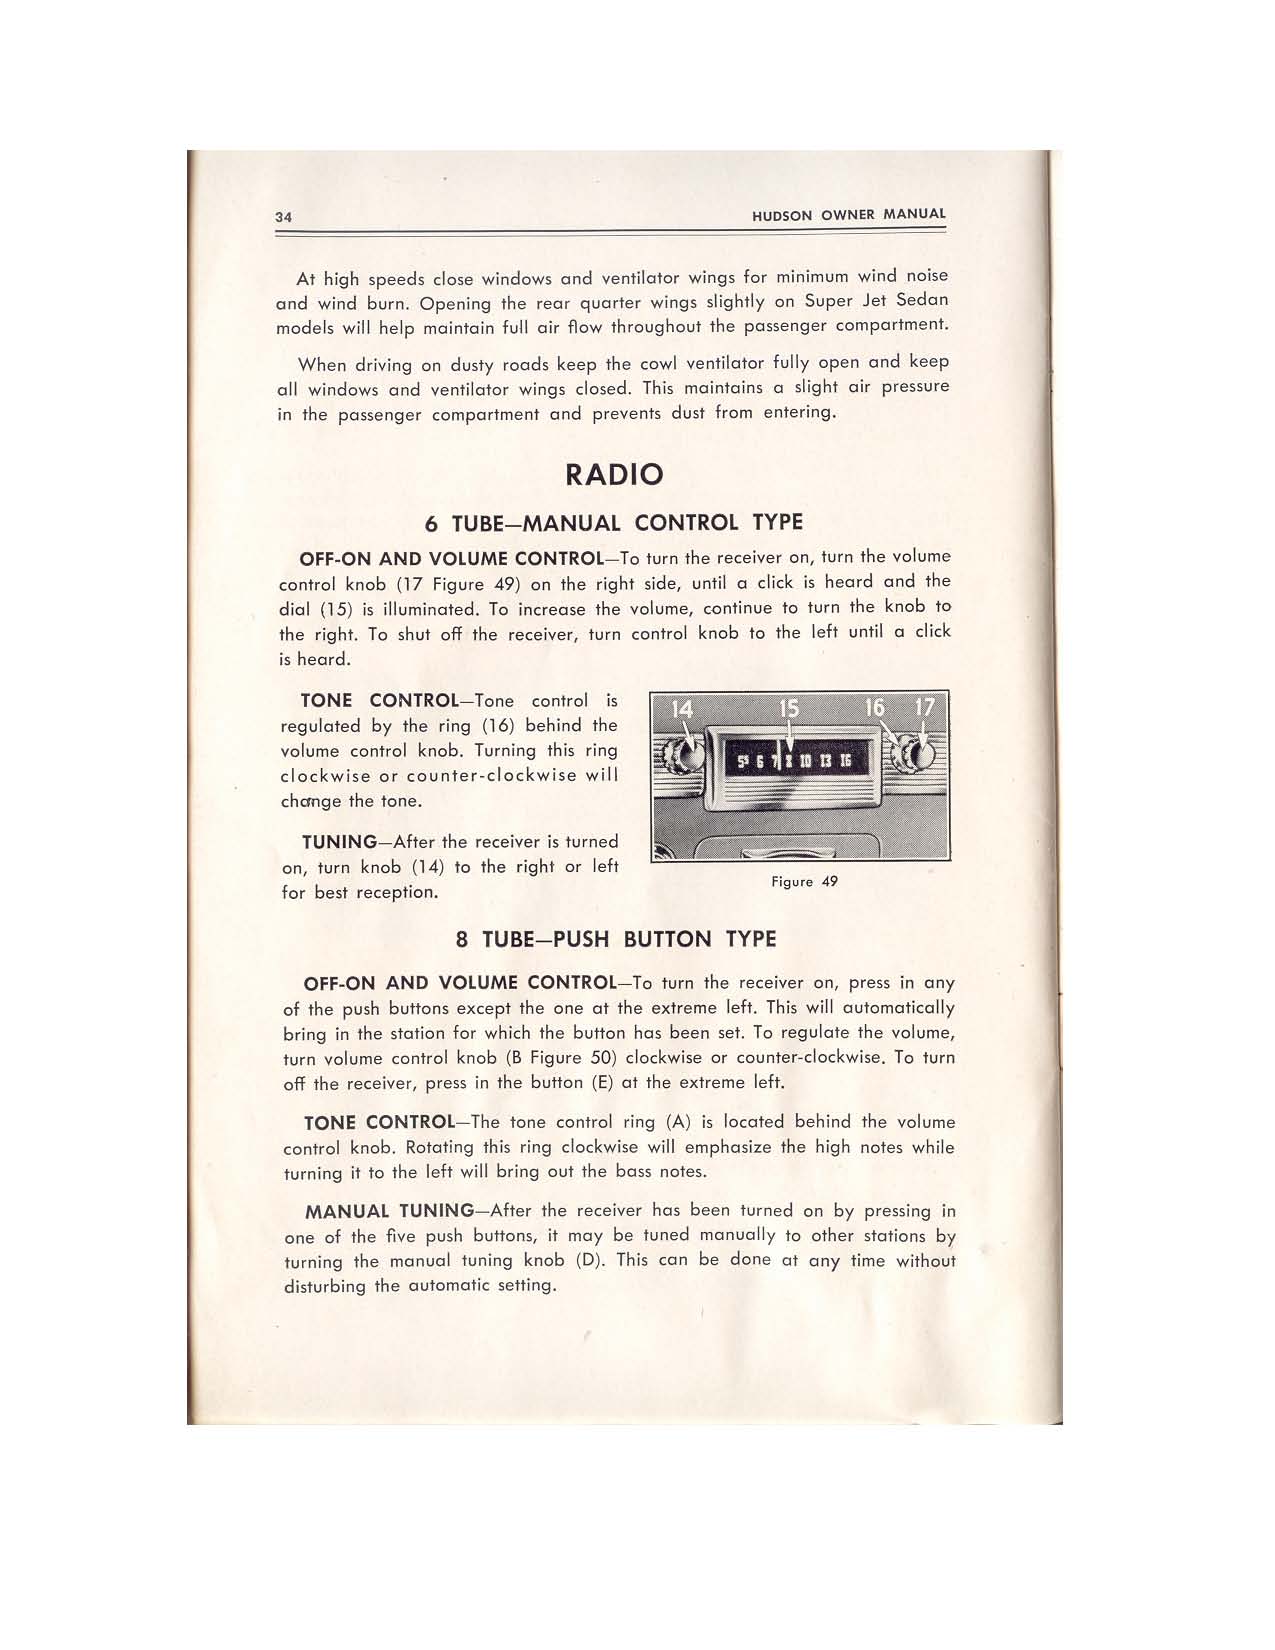 1953_Hudson_Jet_Owners_Manual-35